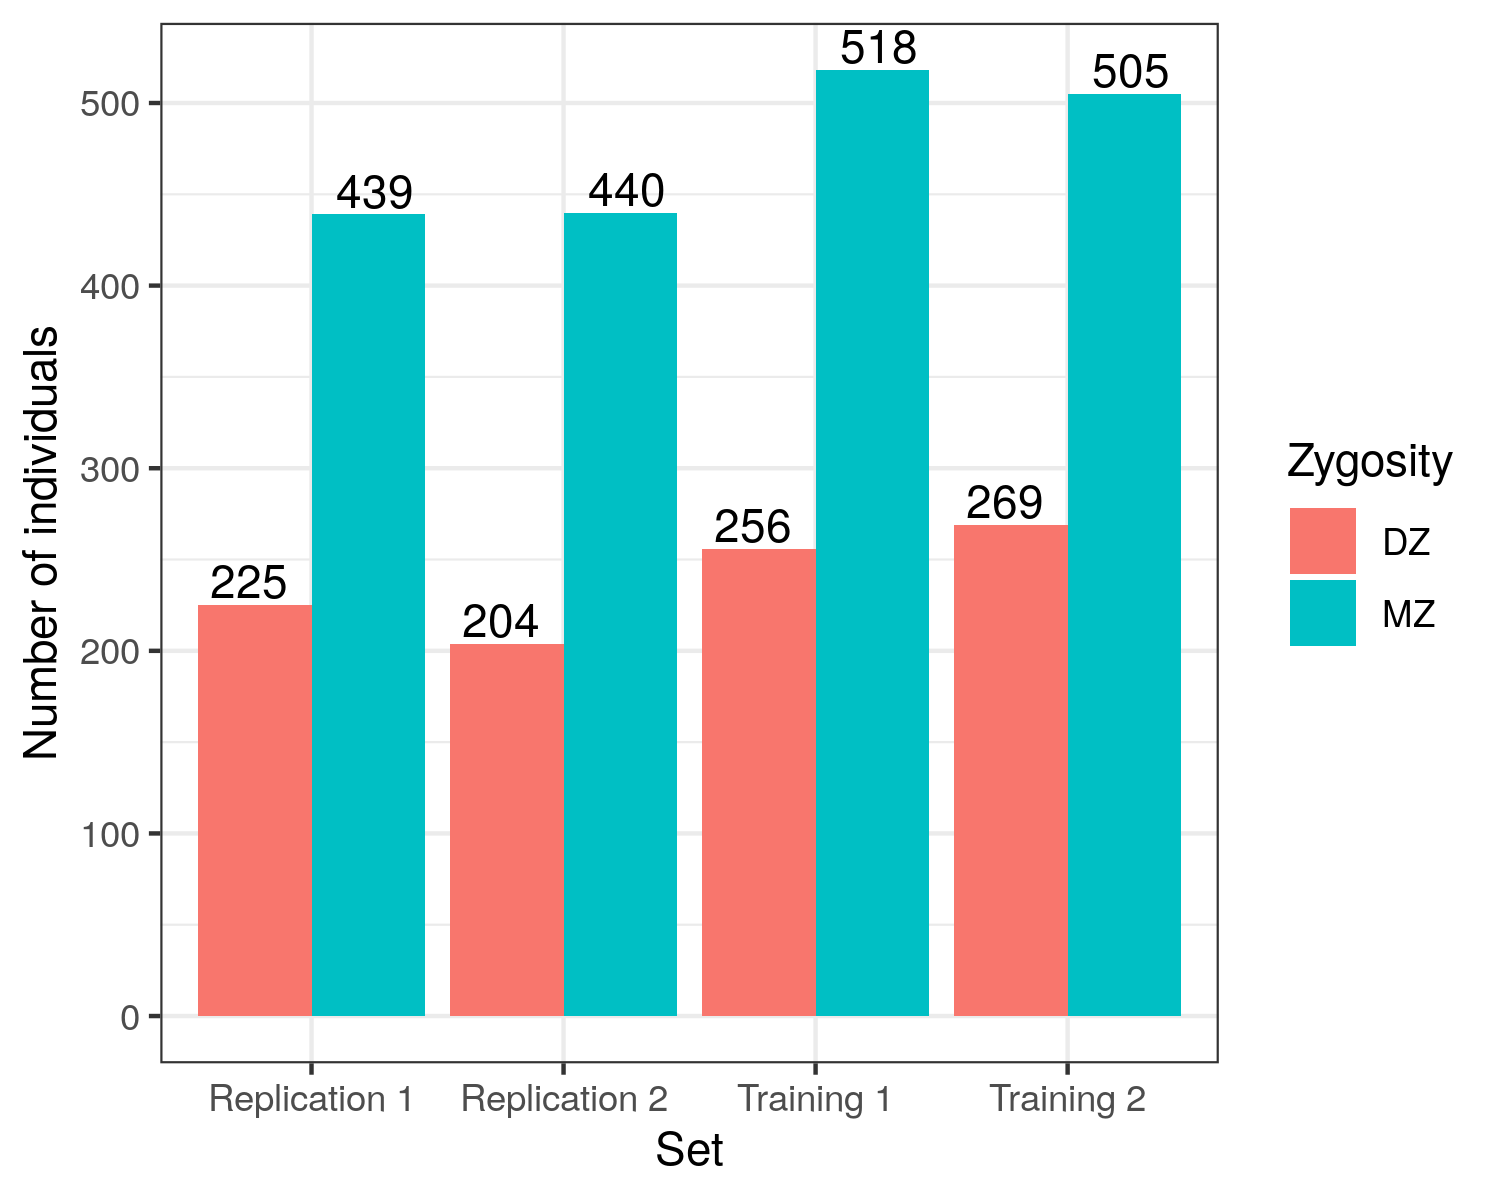 Zygosity Make-up of sets Replication 1 (n = 664, 225 DZ, 439 MZ); Replication 2 (n = 644, 204 DZ, 440 MZ), Training 1 (n = 774, 256 DZ, 518 MZ); Training 2 (n = 774, 269 DZ, 505 MZ).